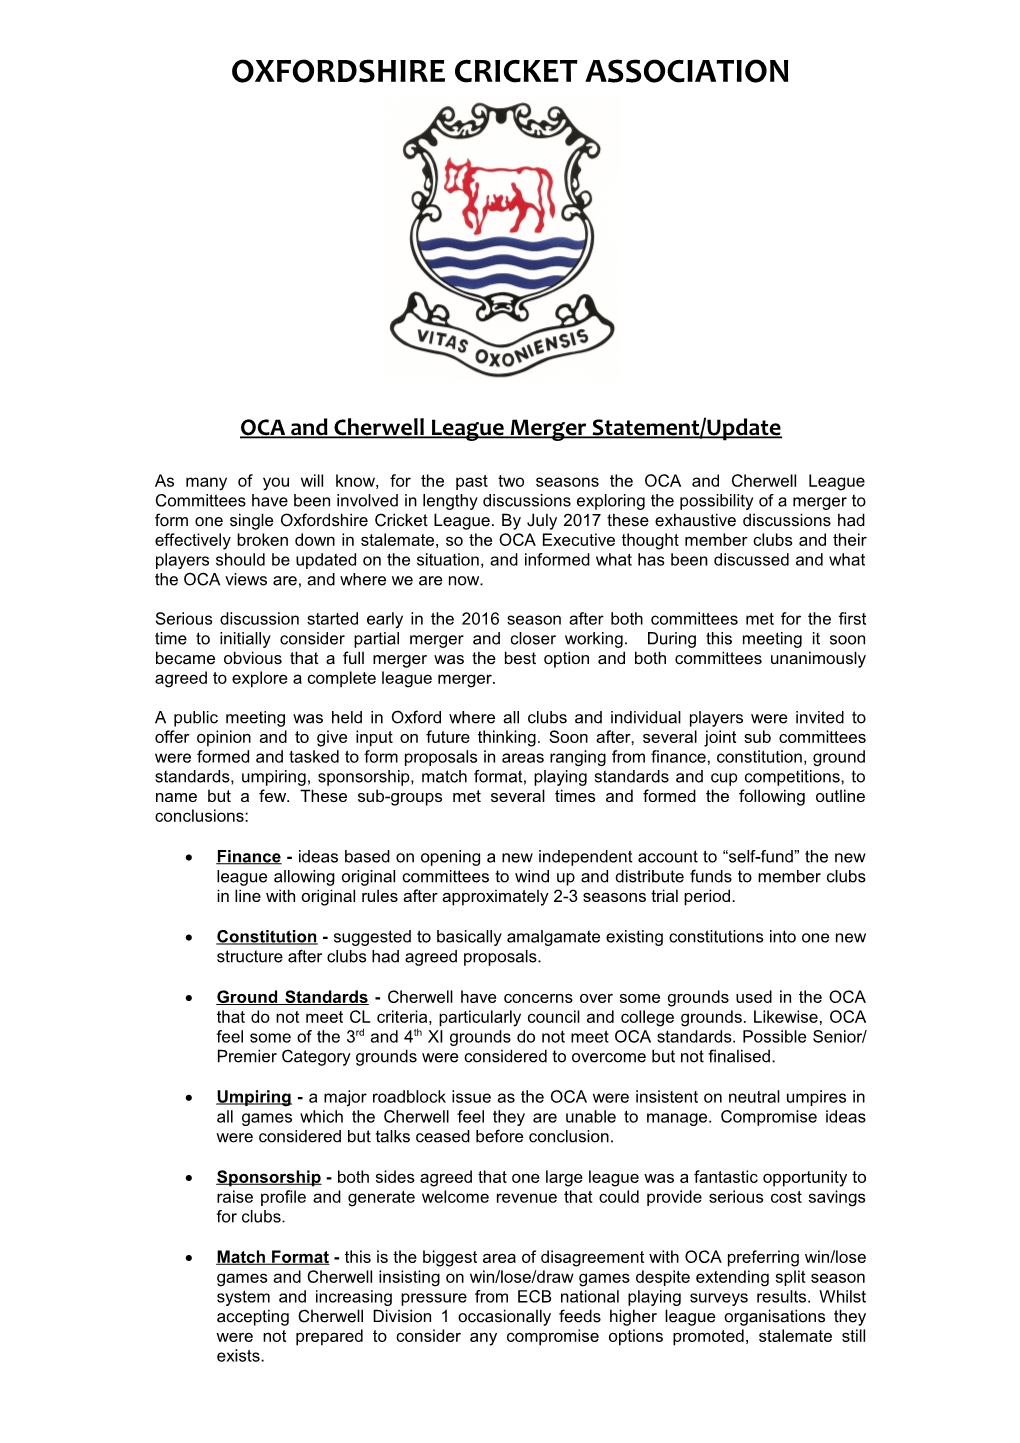 OCA and Cherwell League Merger Statement/Update